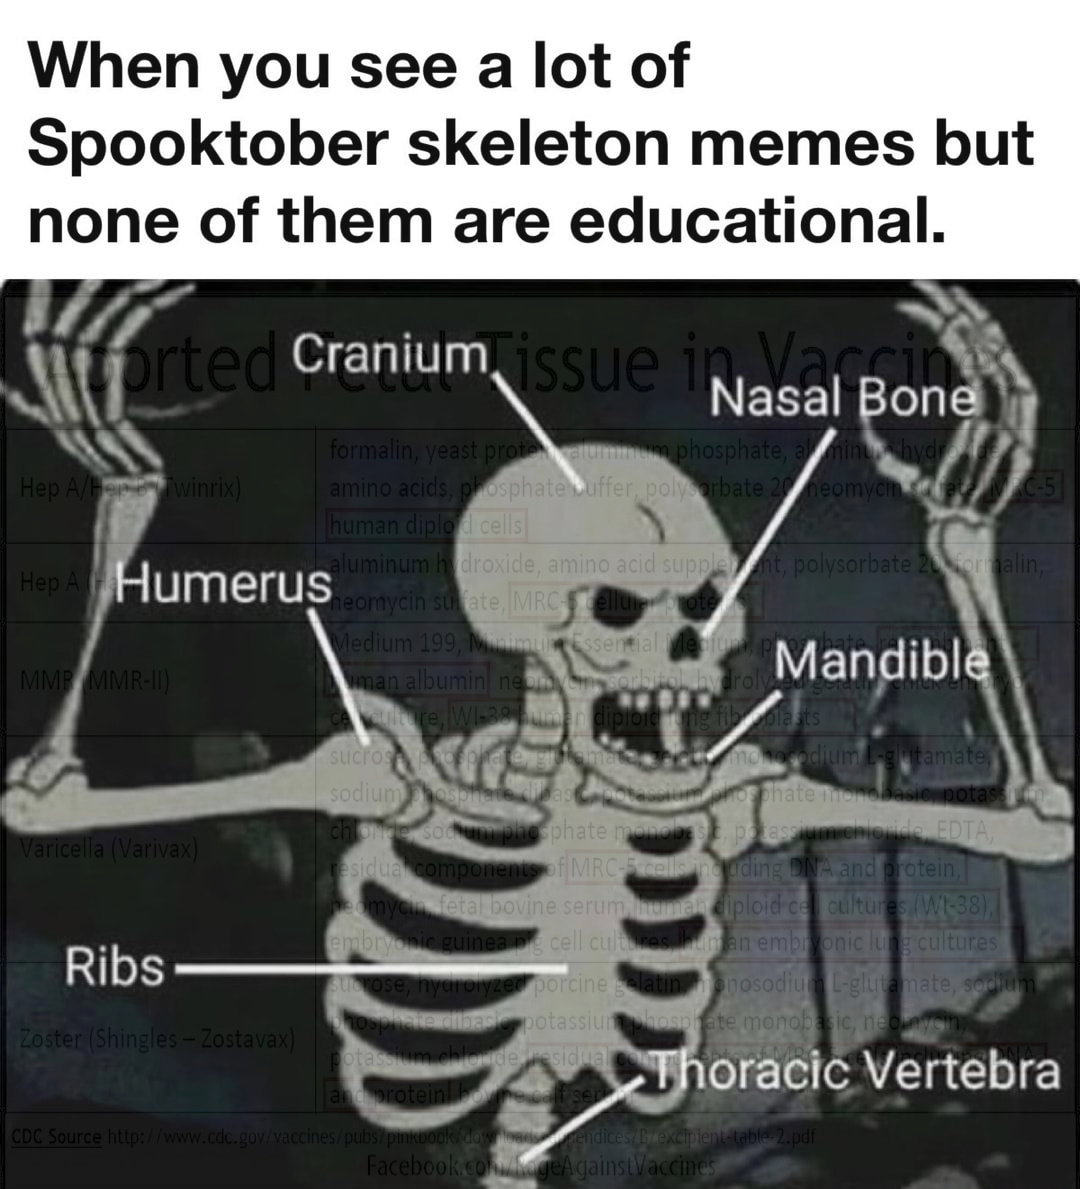 Educational spooky memes